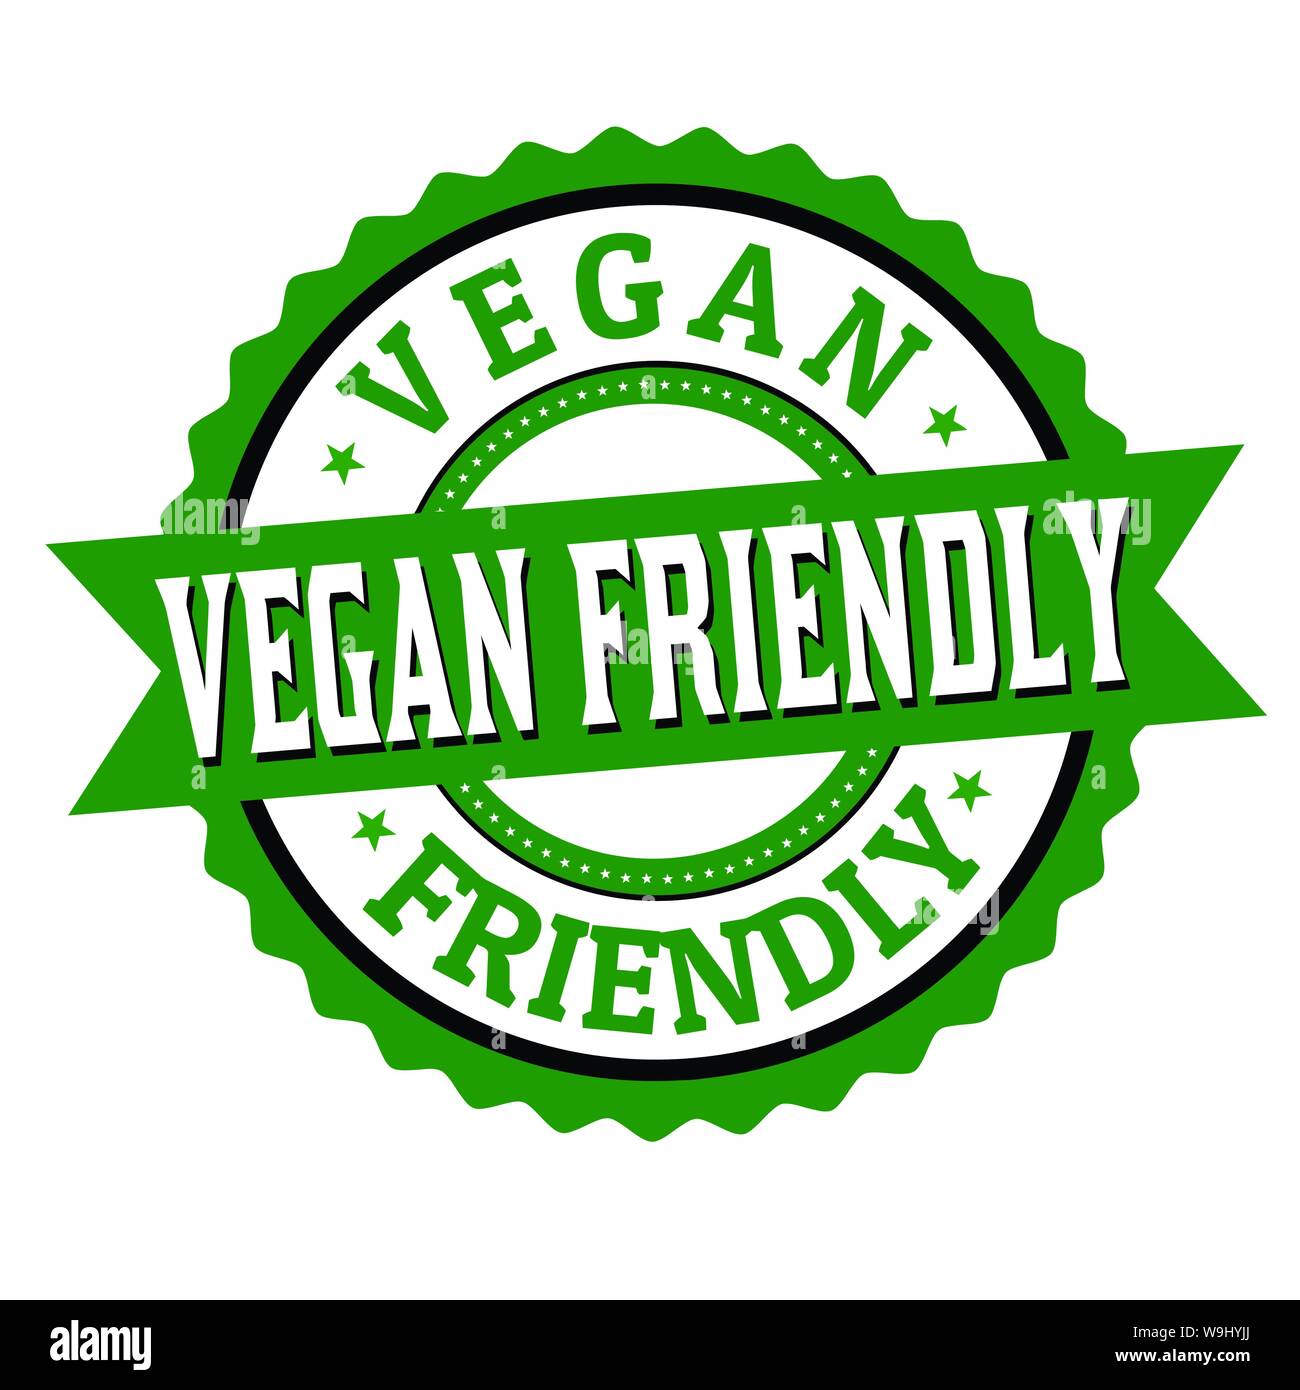 Vegan friendly label or sticker on white background, vector illustration Stock Vector